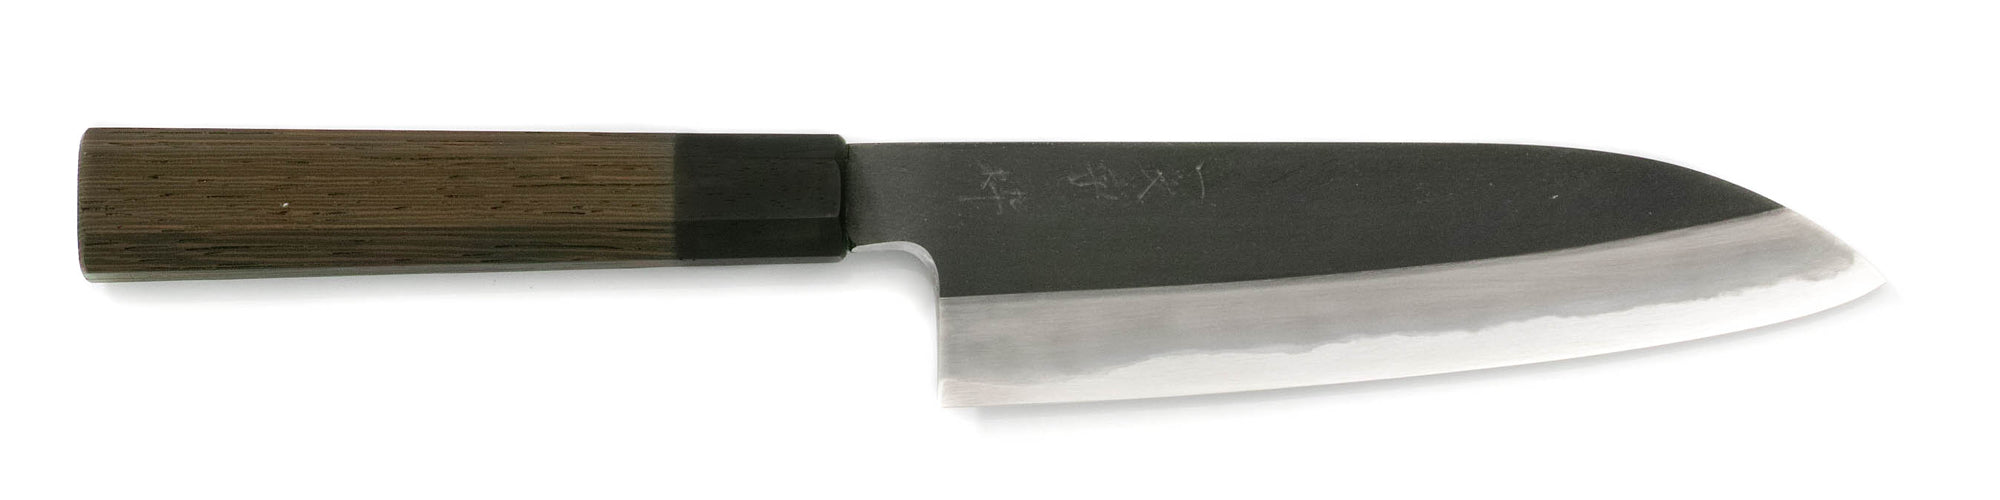 Ichimonji -SUI Kiwami- Blue Steel #2 Kurozome Wa-Santoku Knife